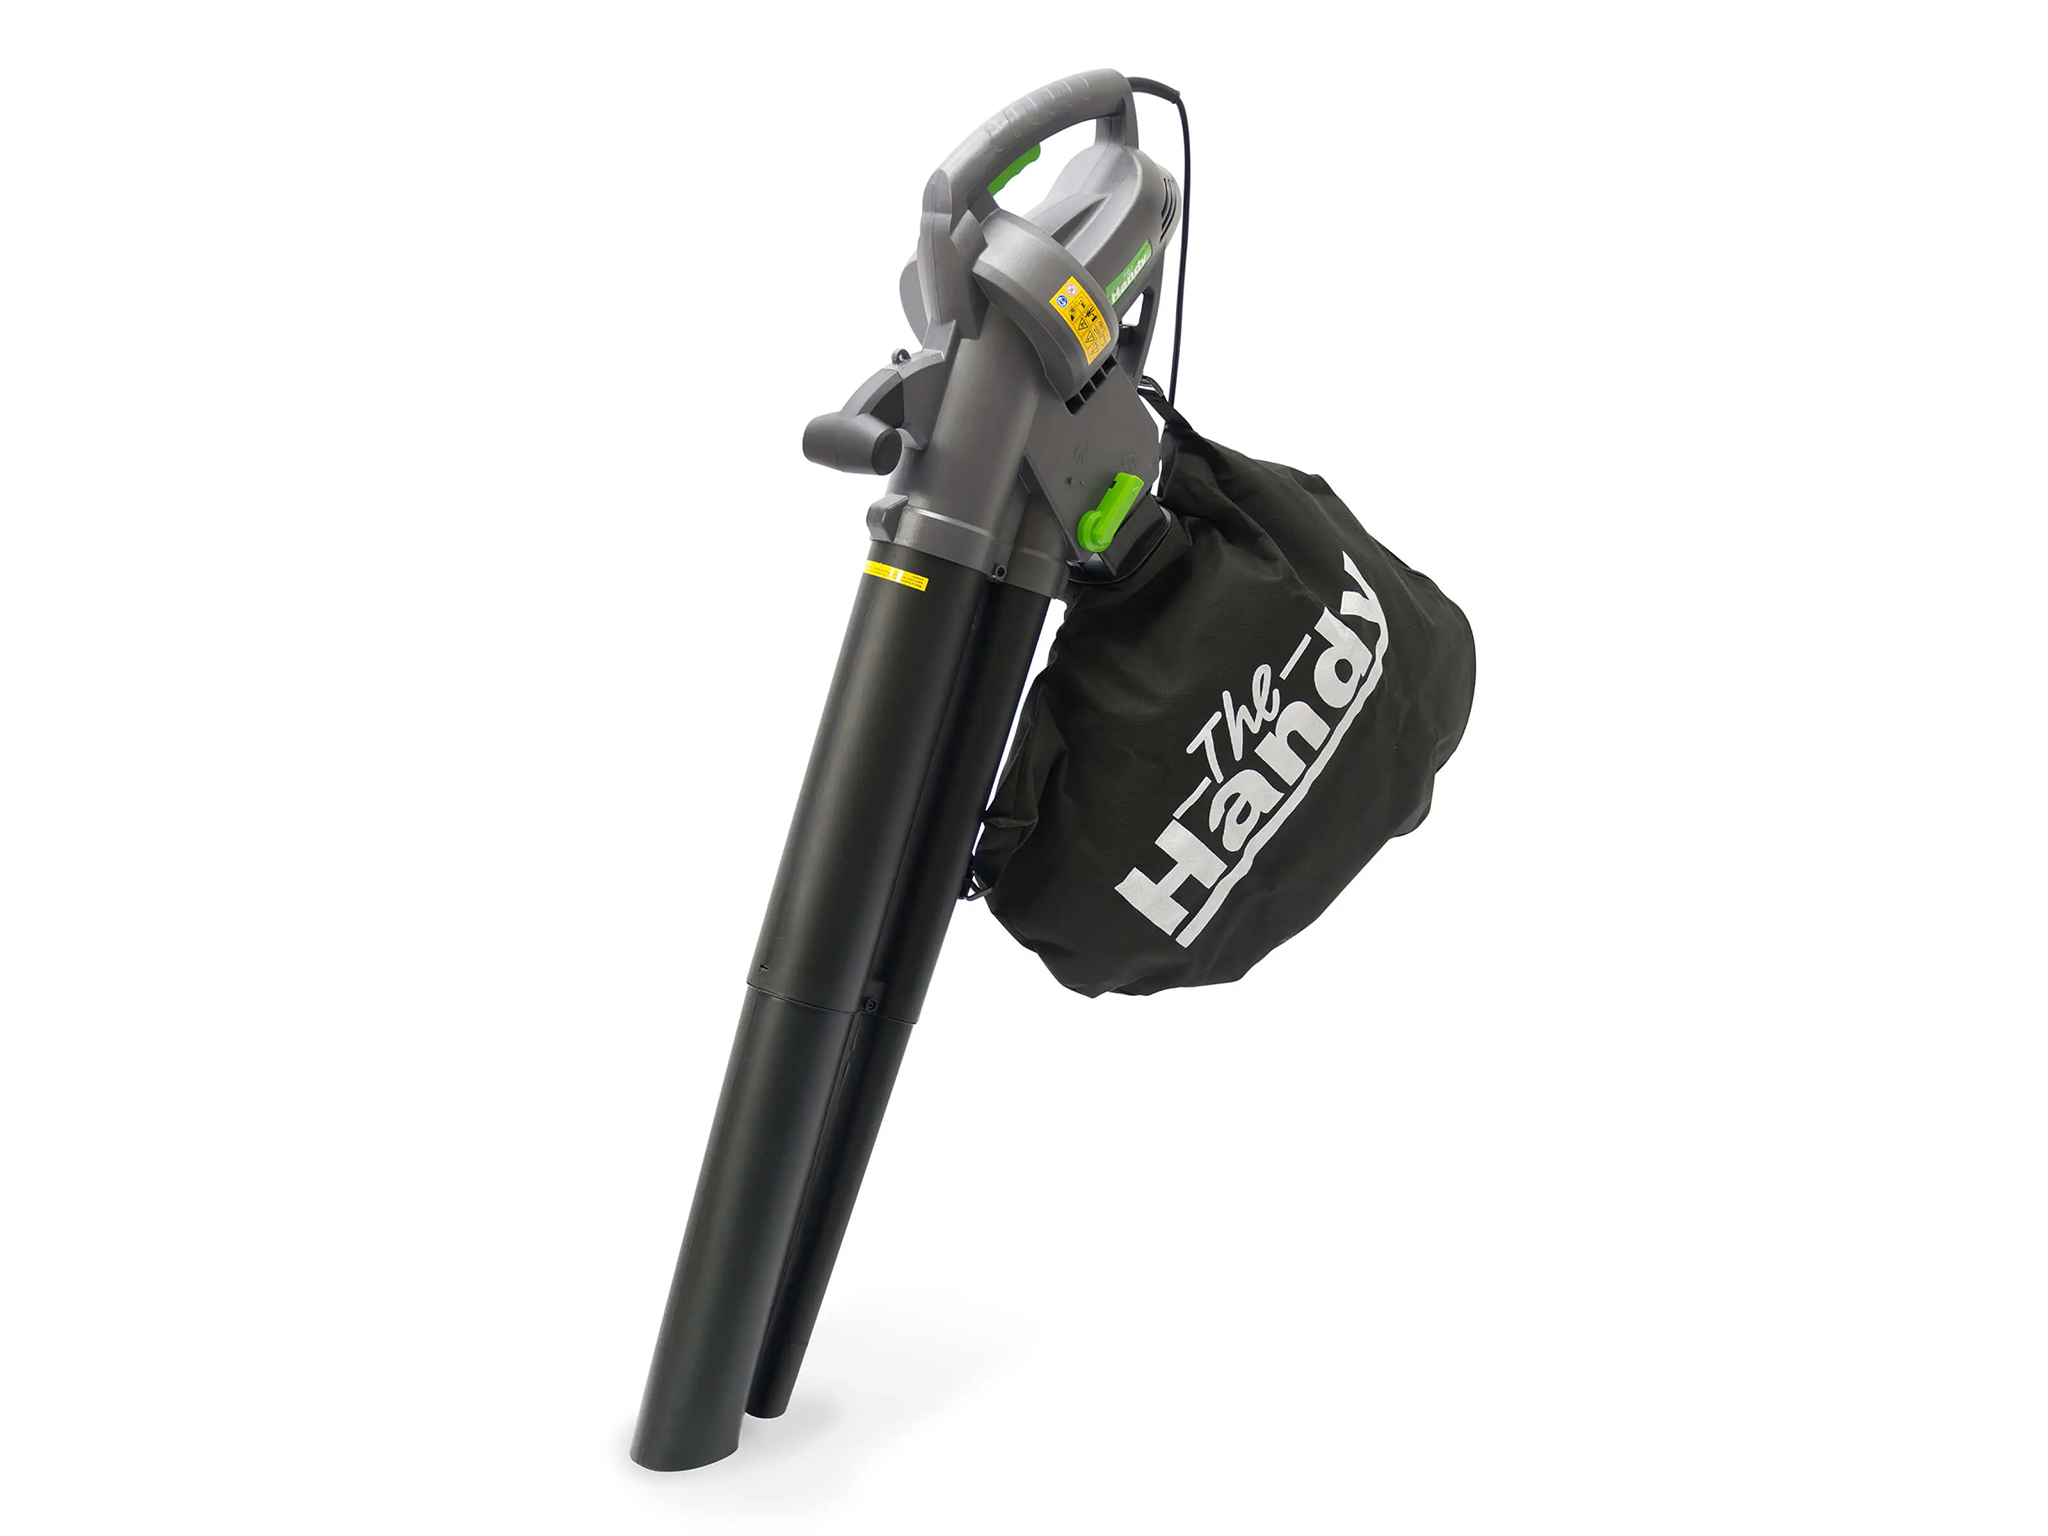 Handy variable speed 3000W garden blower & vacuum